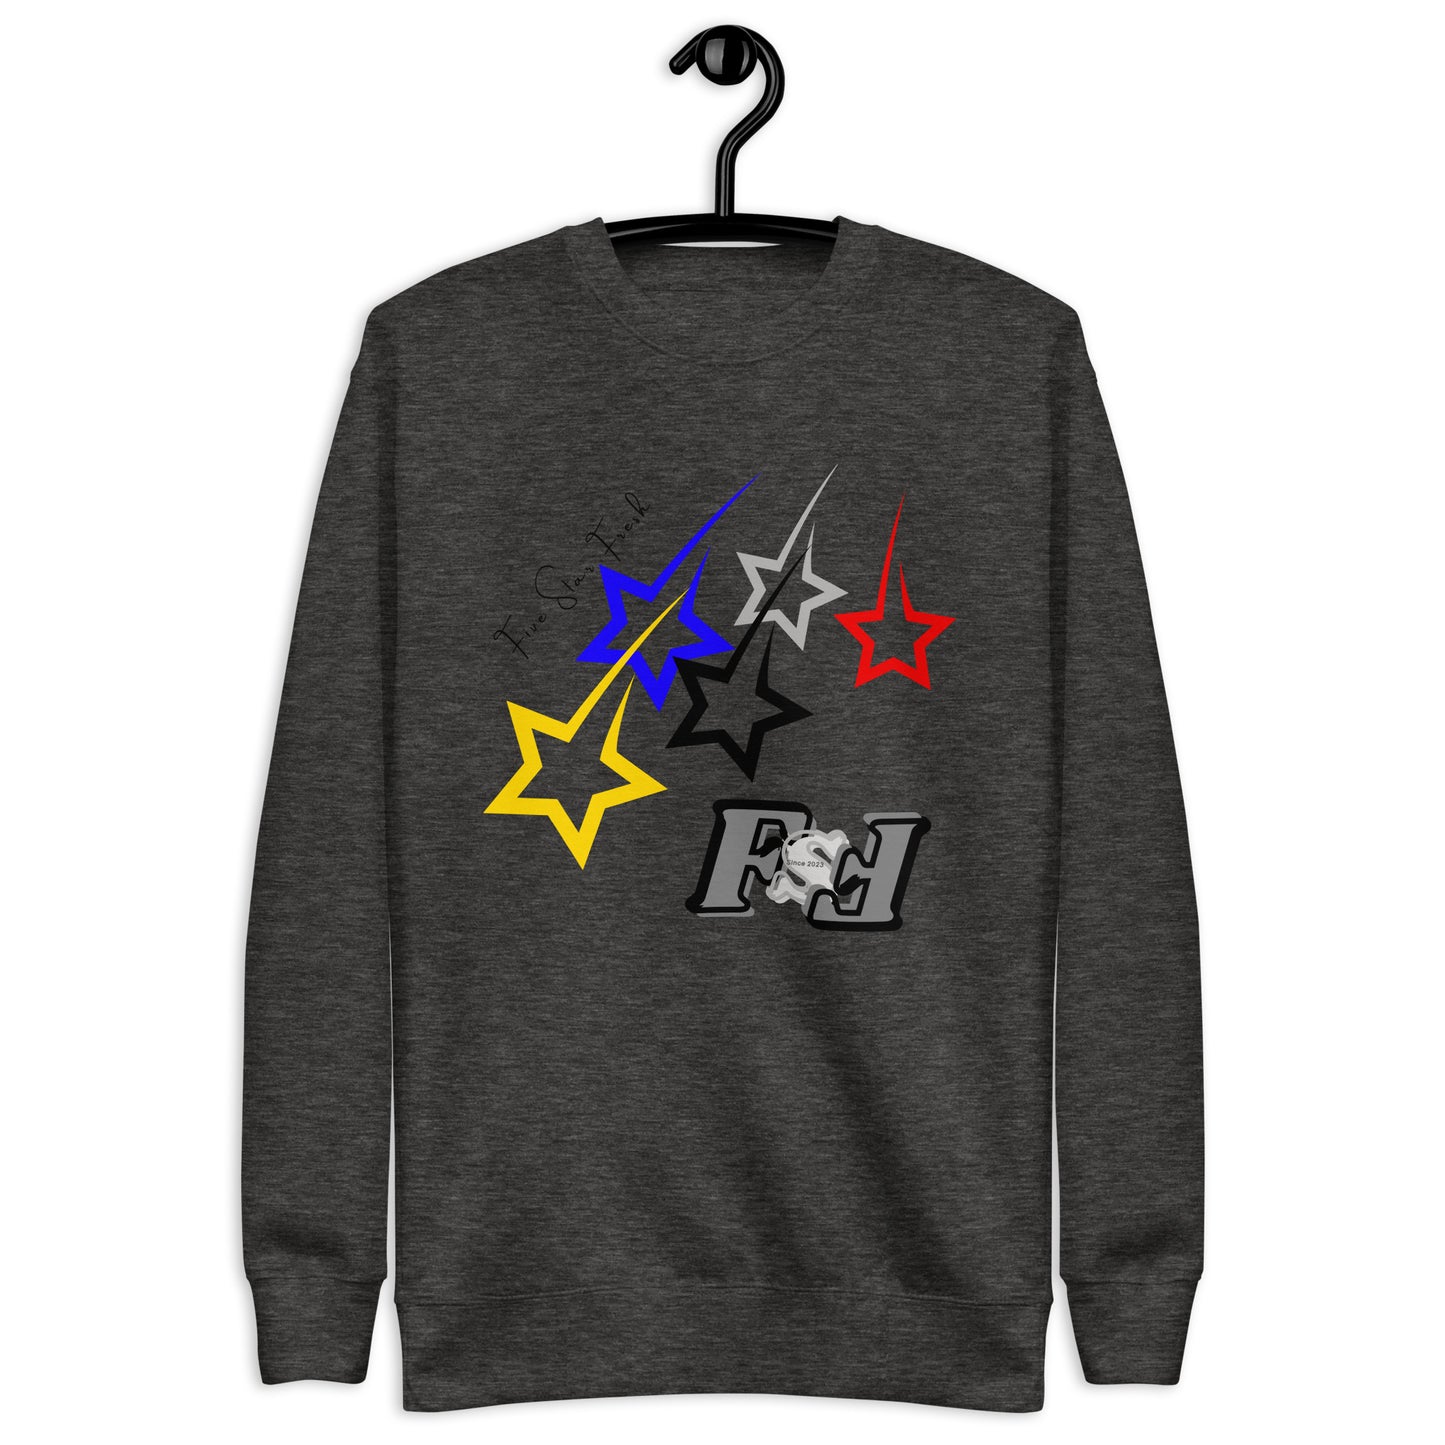 'Shooting Star' Bright - Five Star Fresh Unisex Premium Sweatshirt